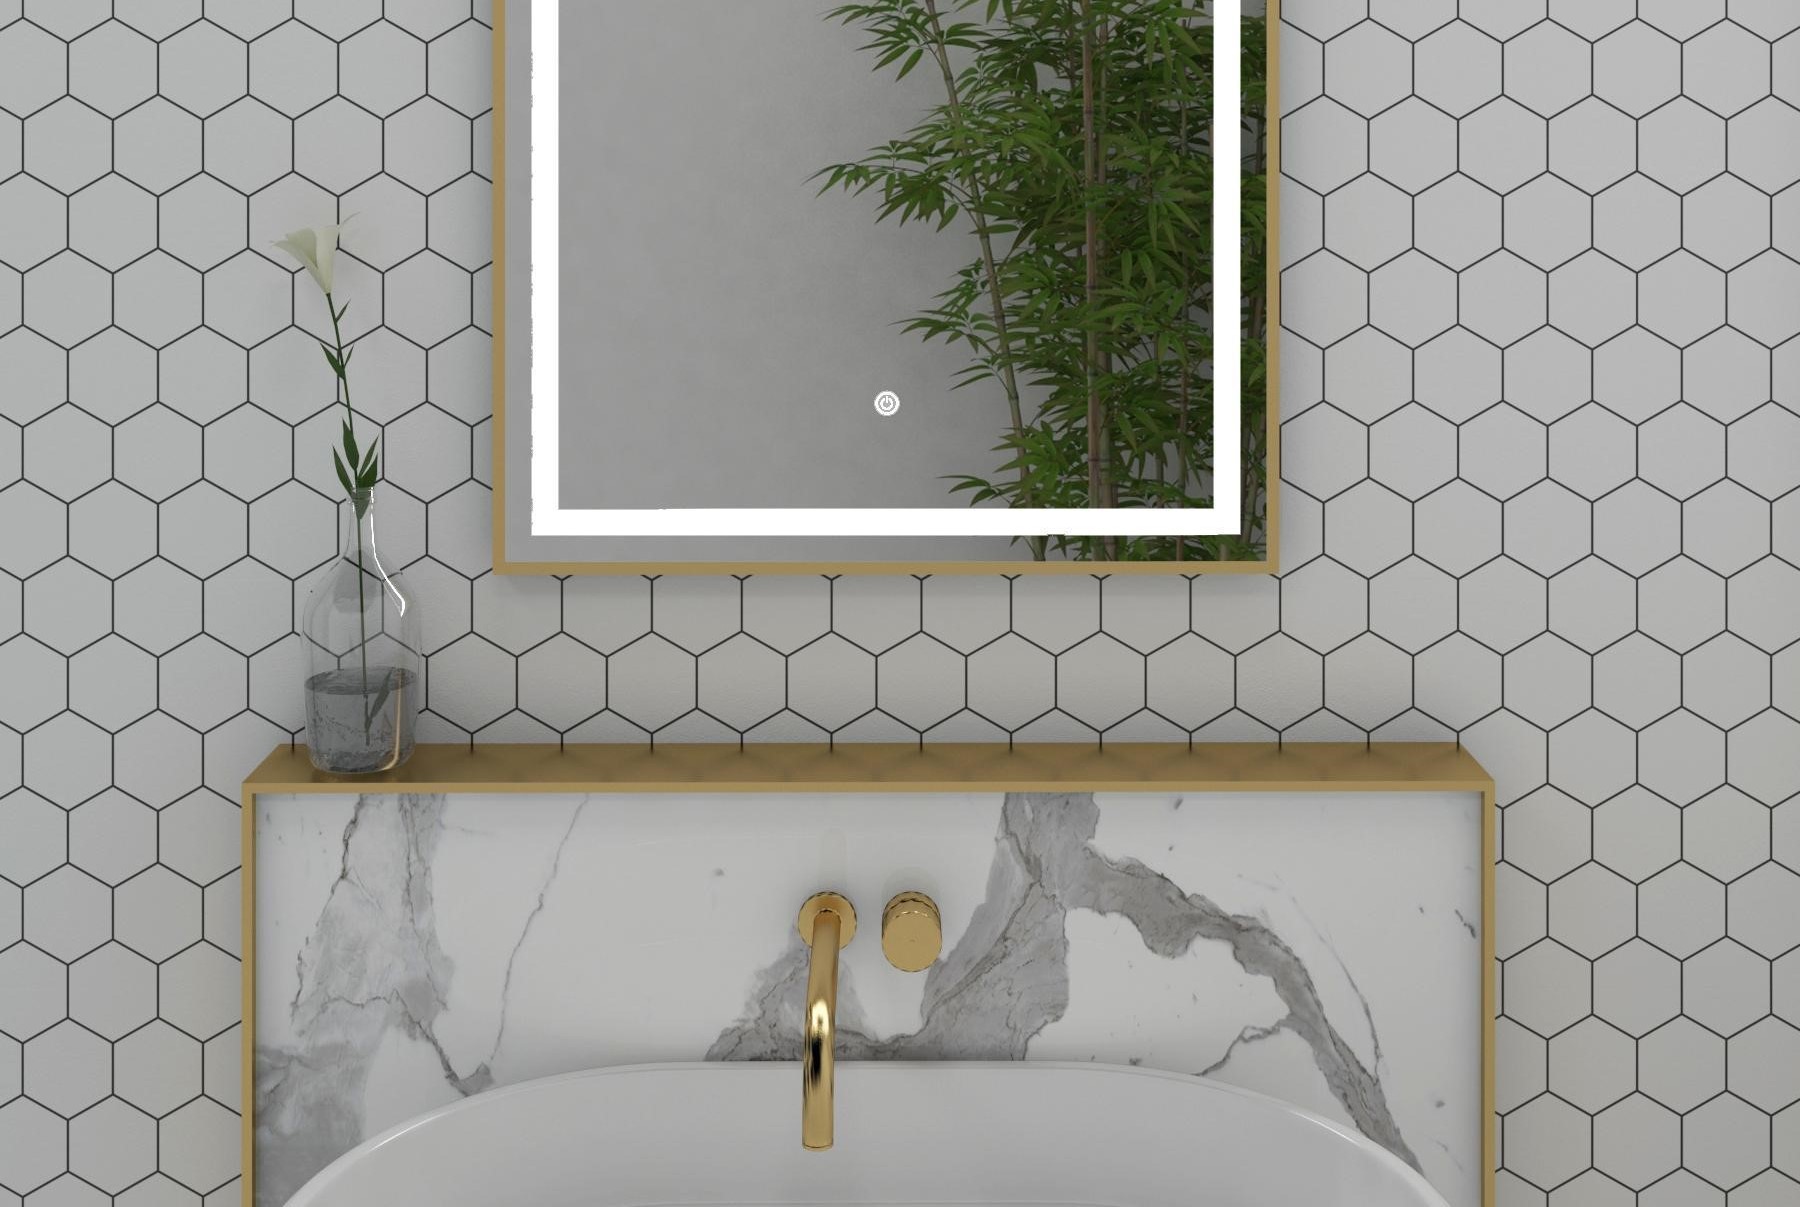 6 Stylish Bathroom Mirror Options For A Transformative Upgrade